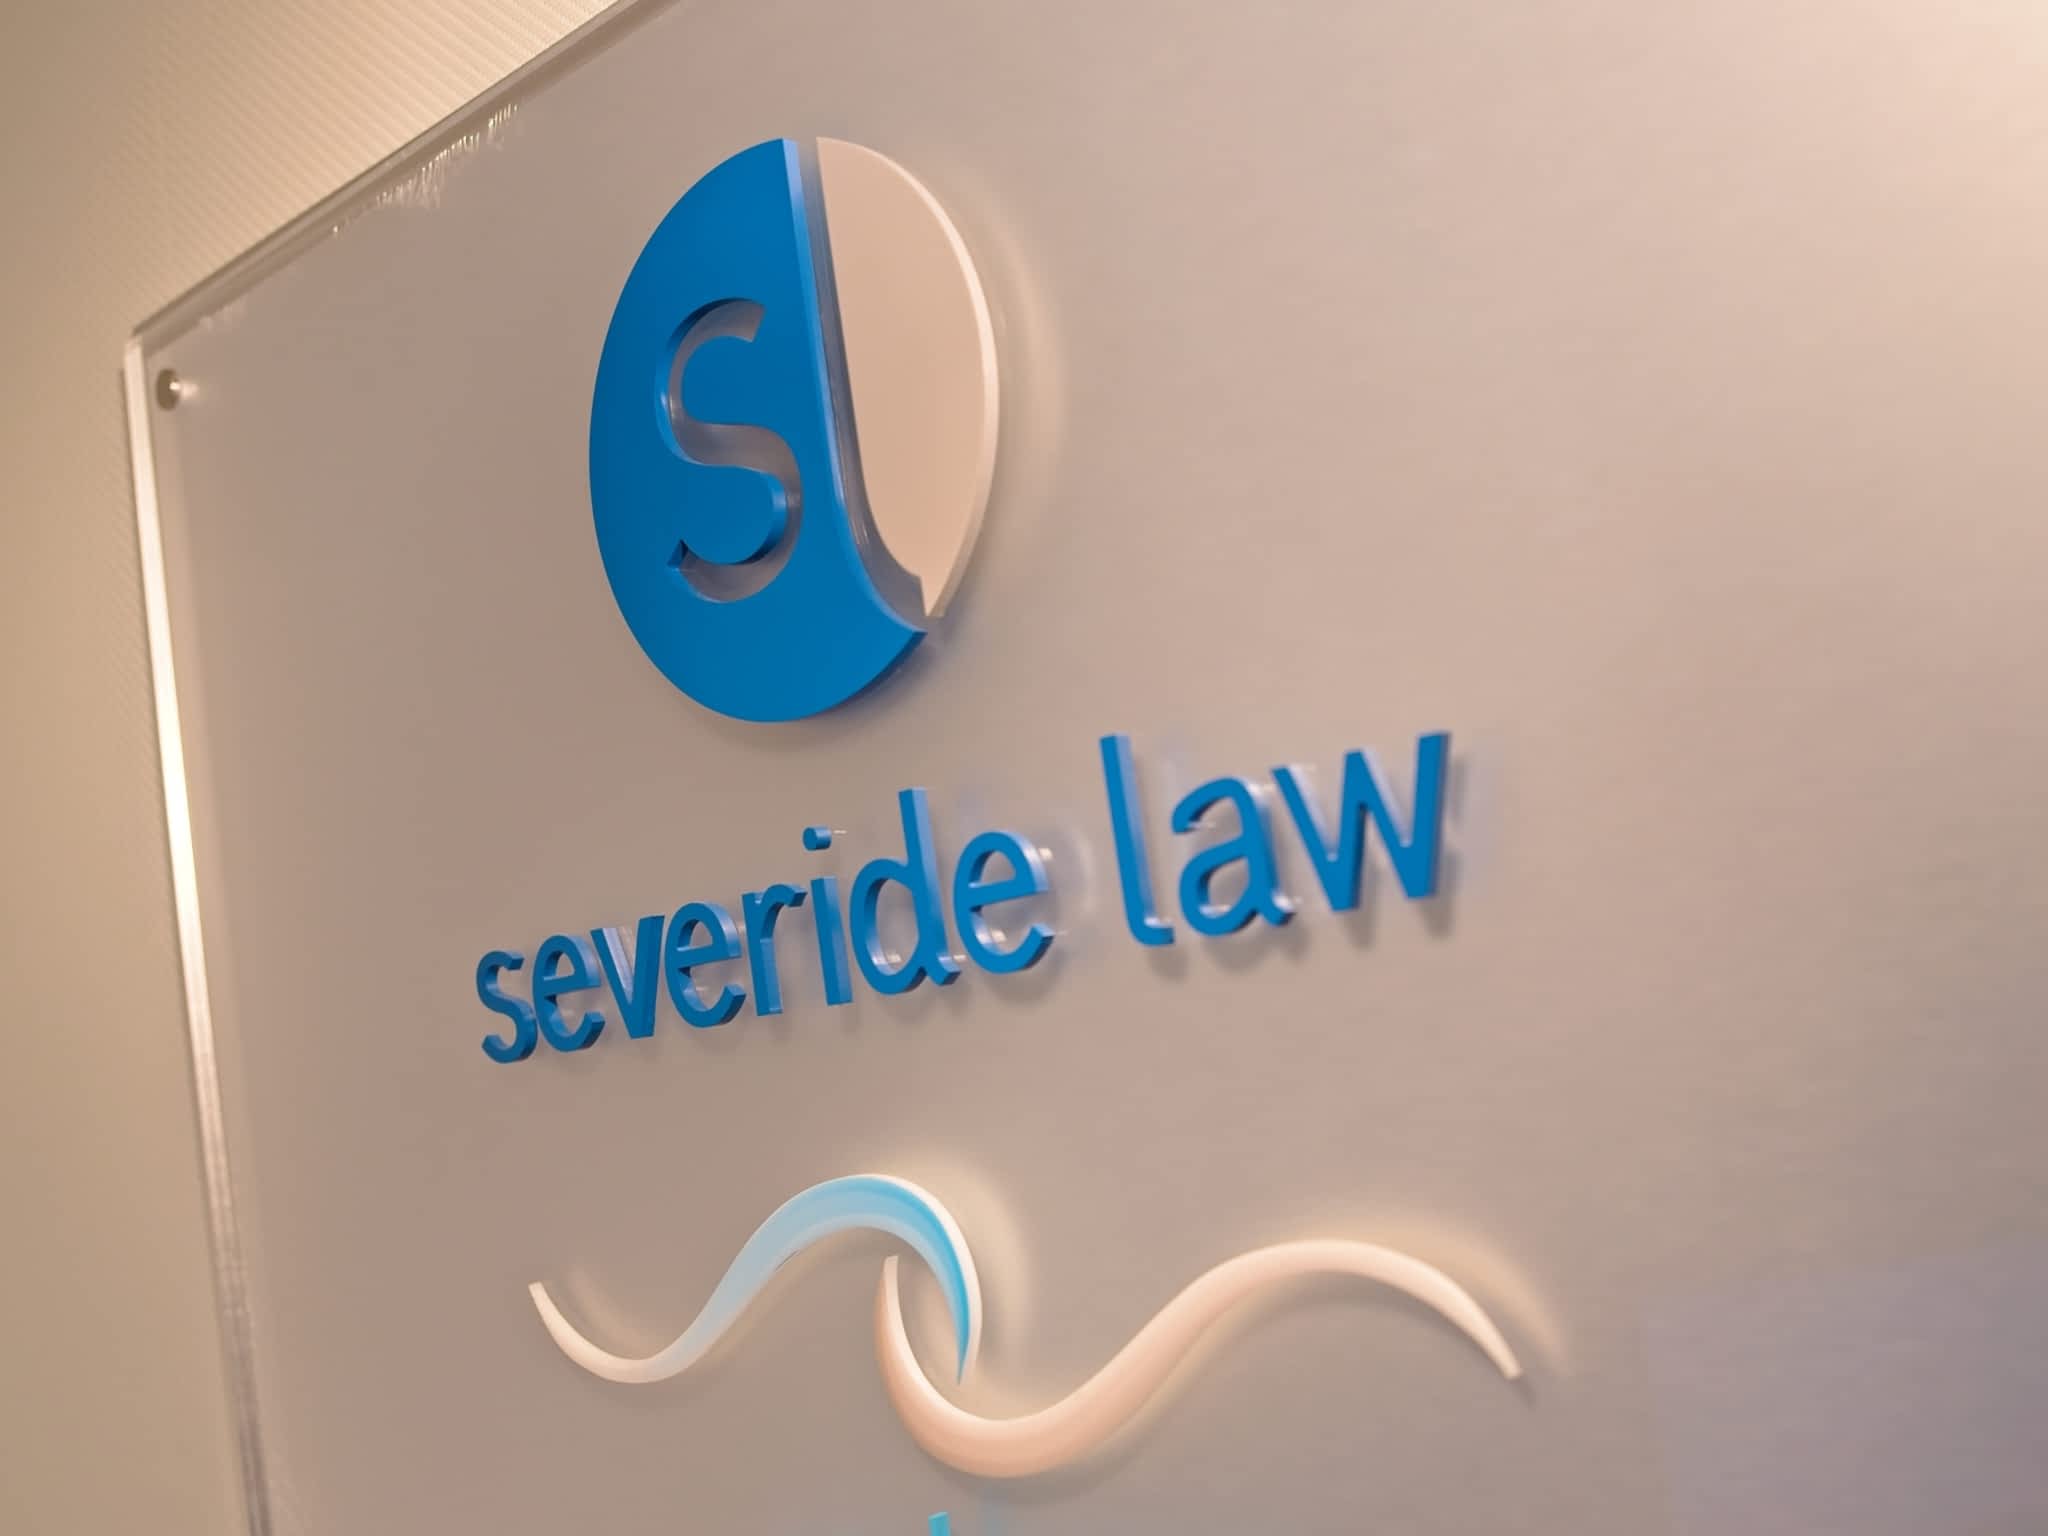 photo Severide Law